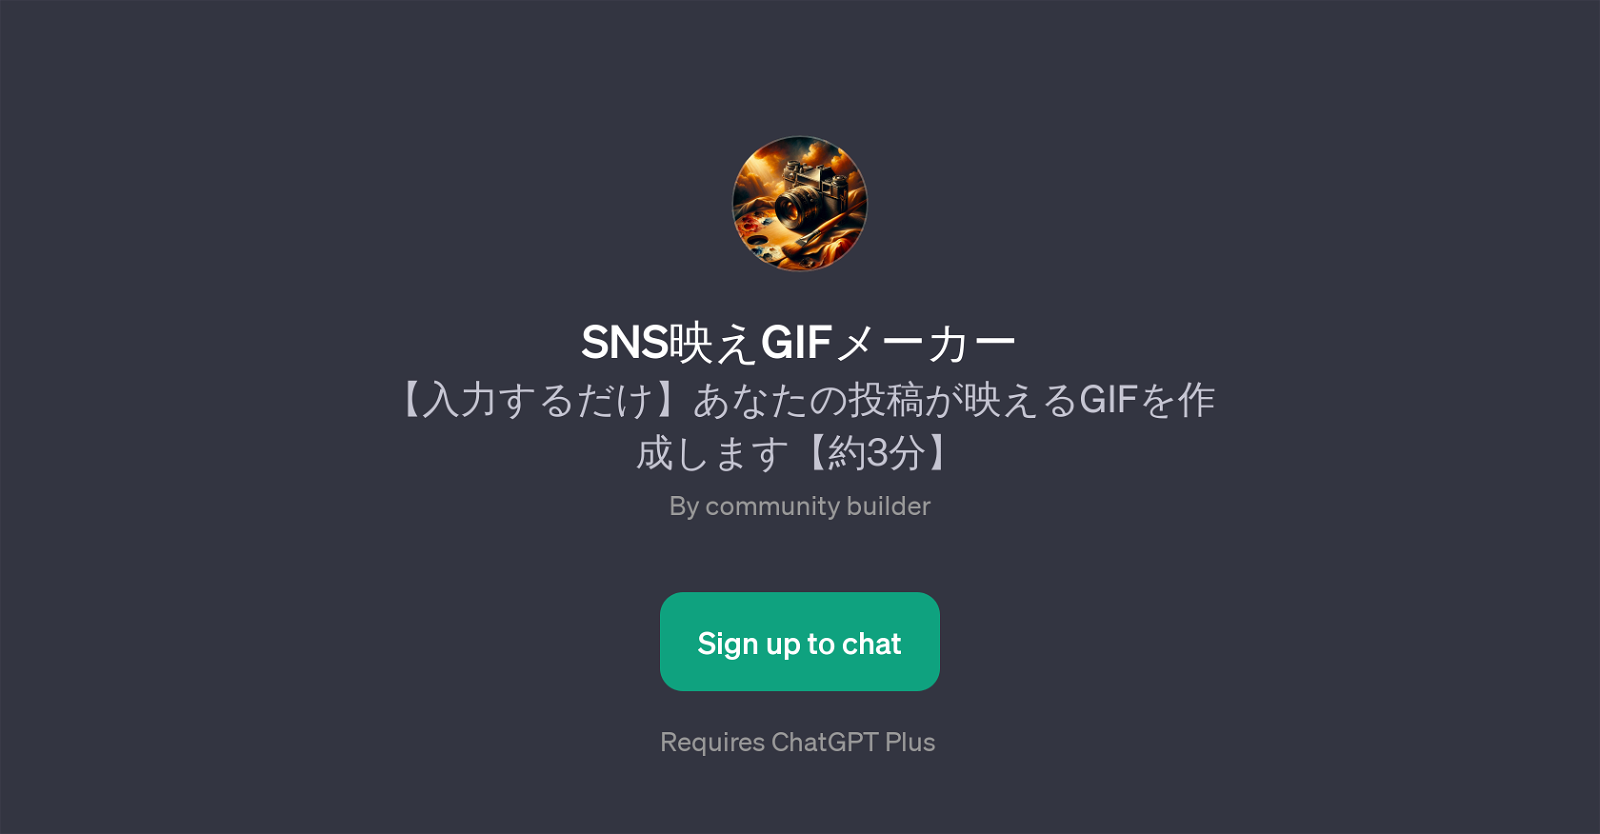 SNSGIF website